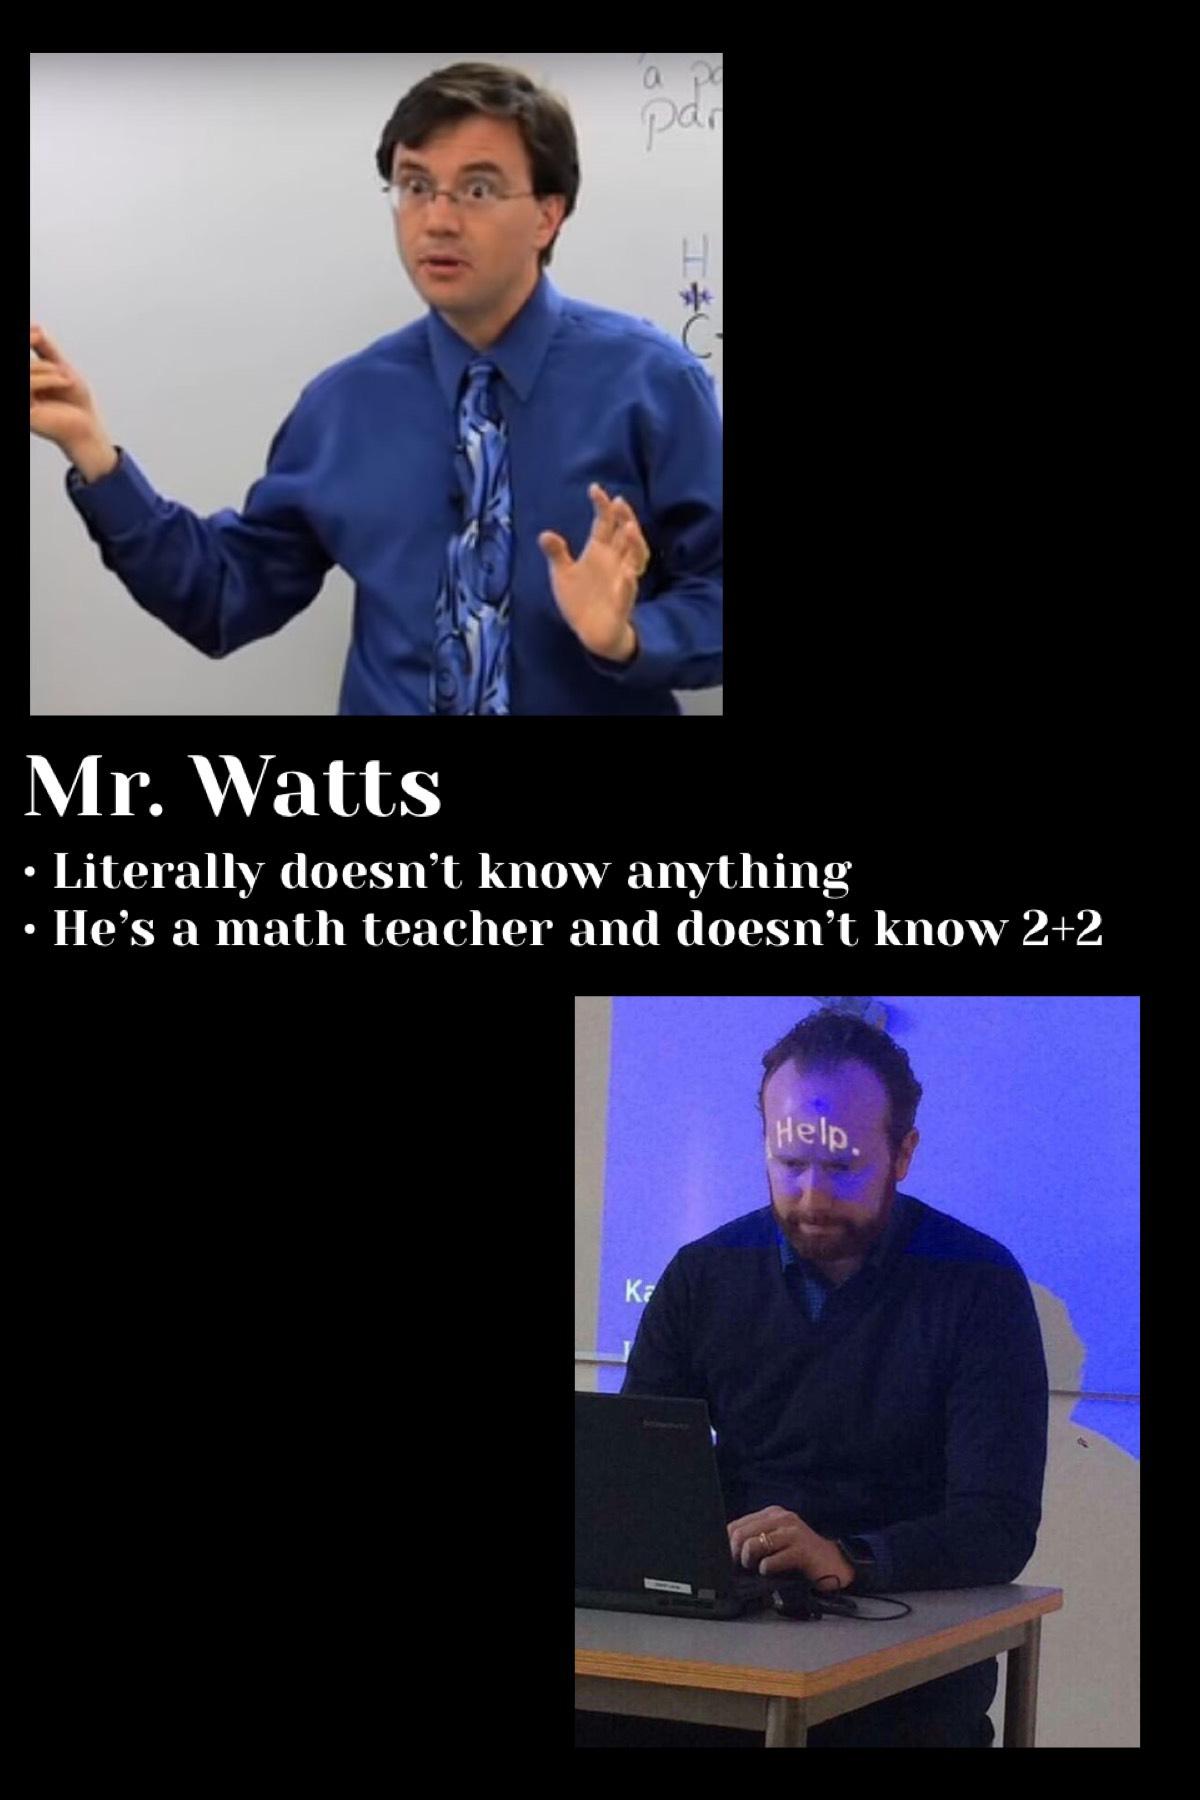 anyone can play Mr. Watts at any time